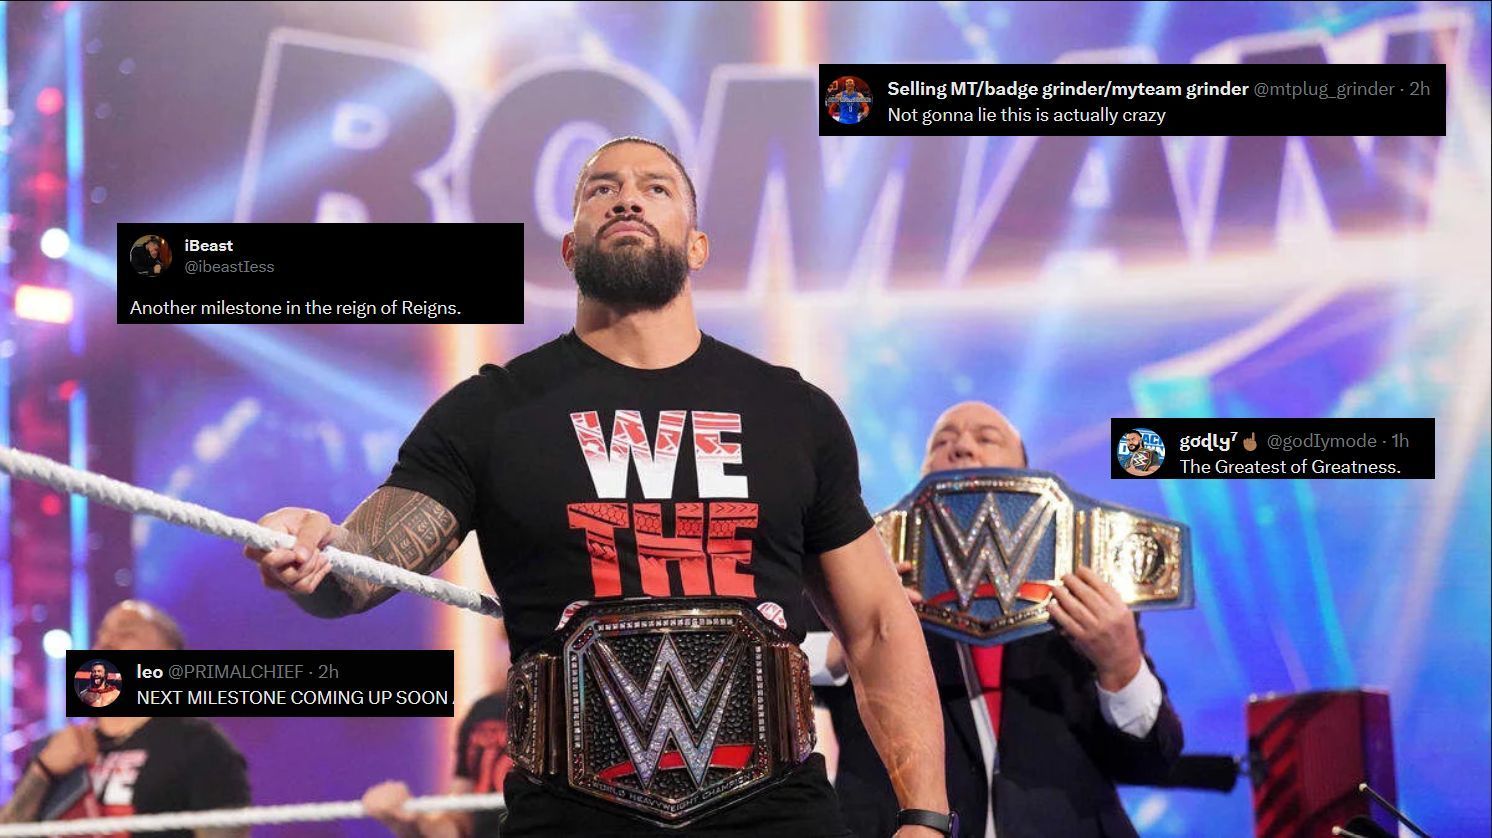 Roman Reigns is reaching new milestones in WWE.